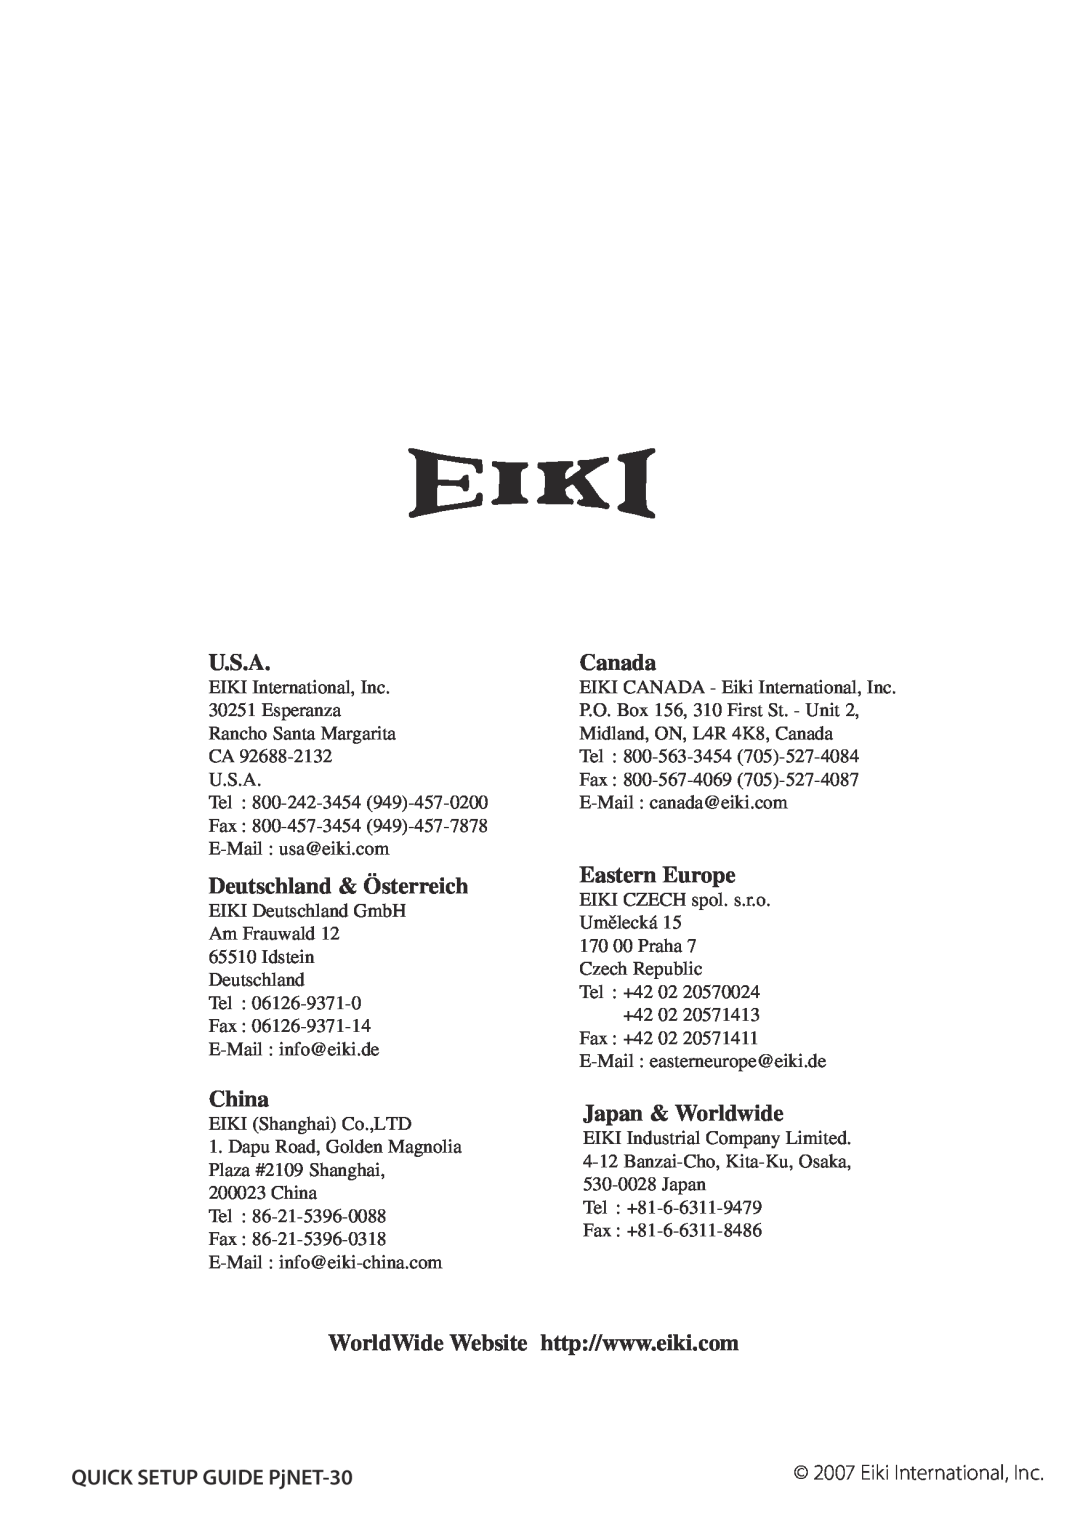 Eiki PJNET-30 setup guide U.S.A, Deutschland & Österreich, China, Canada, Eastern Europe, Japan & Worldwide 